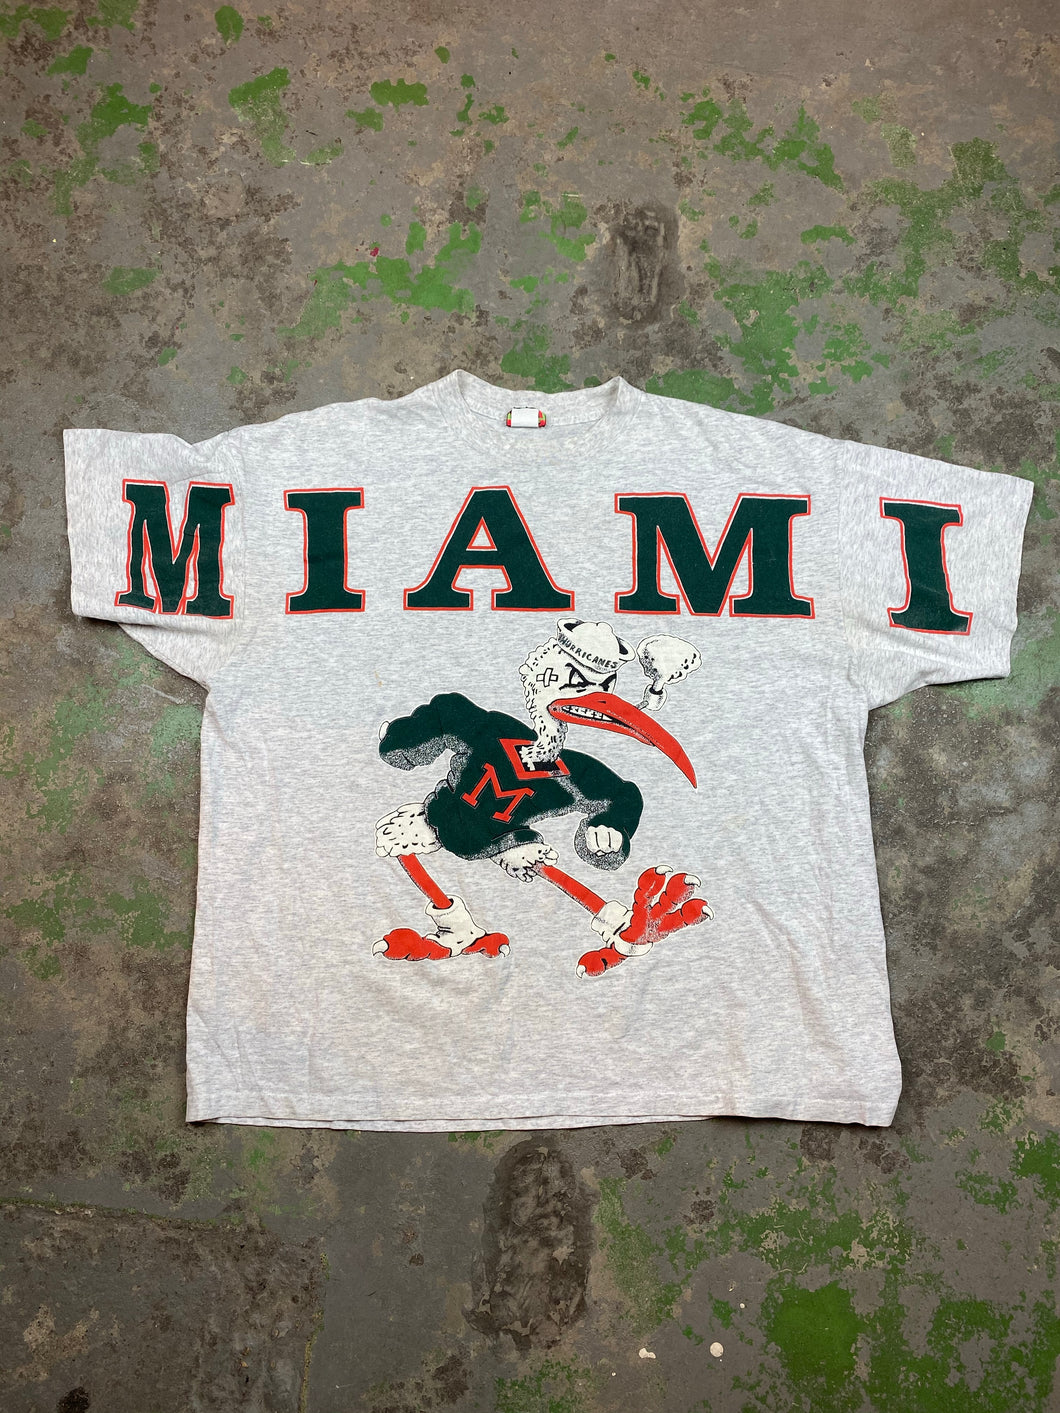 Paper thin Miami t shirt